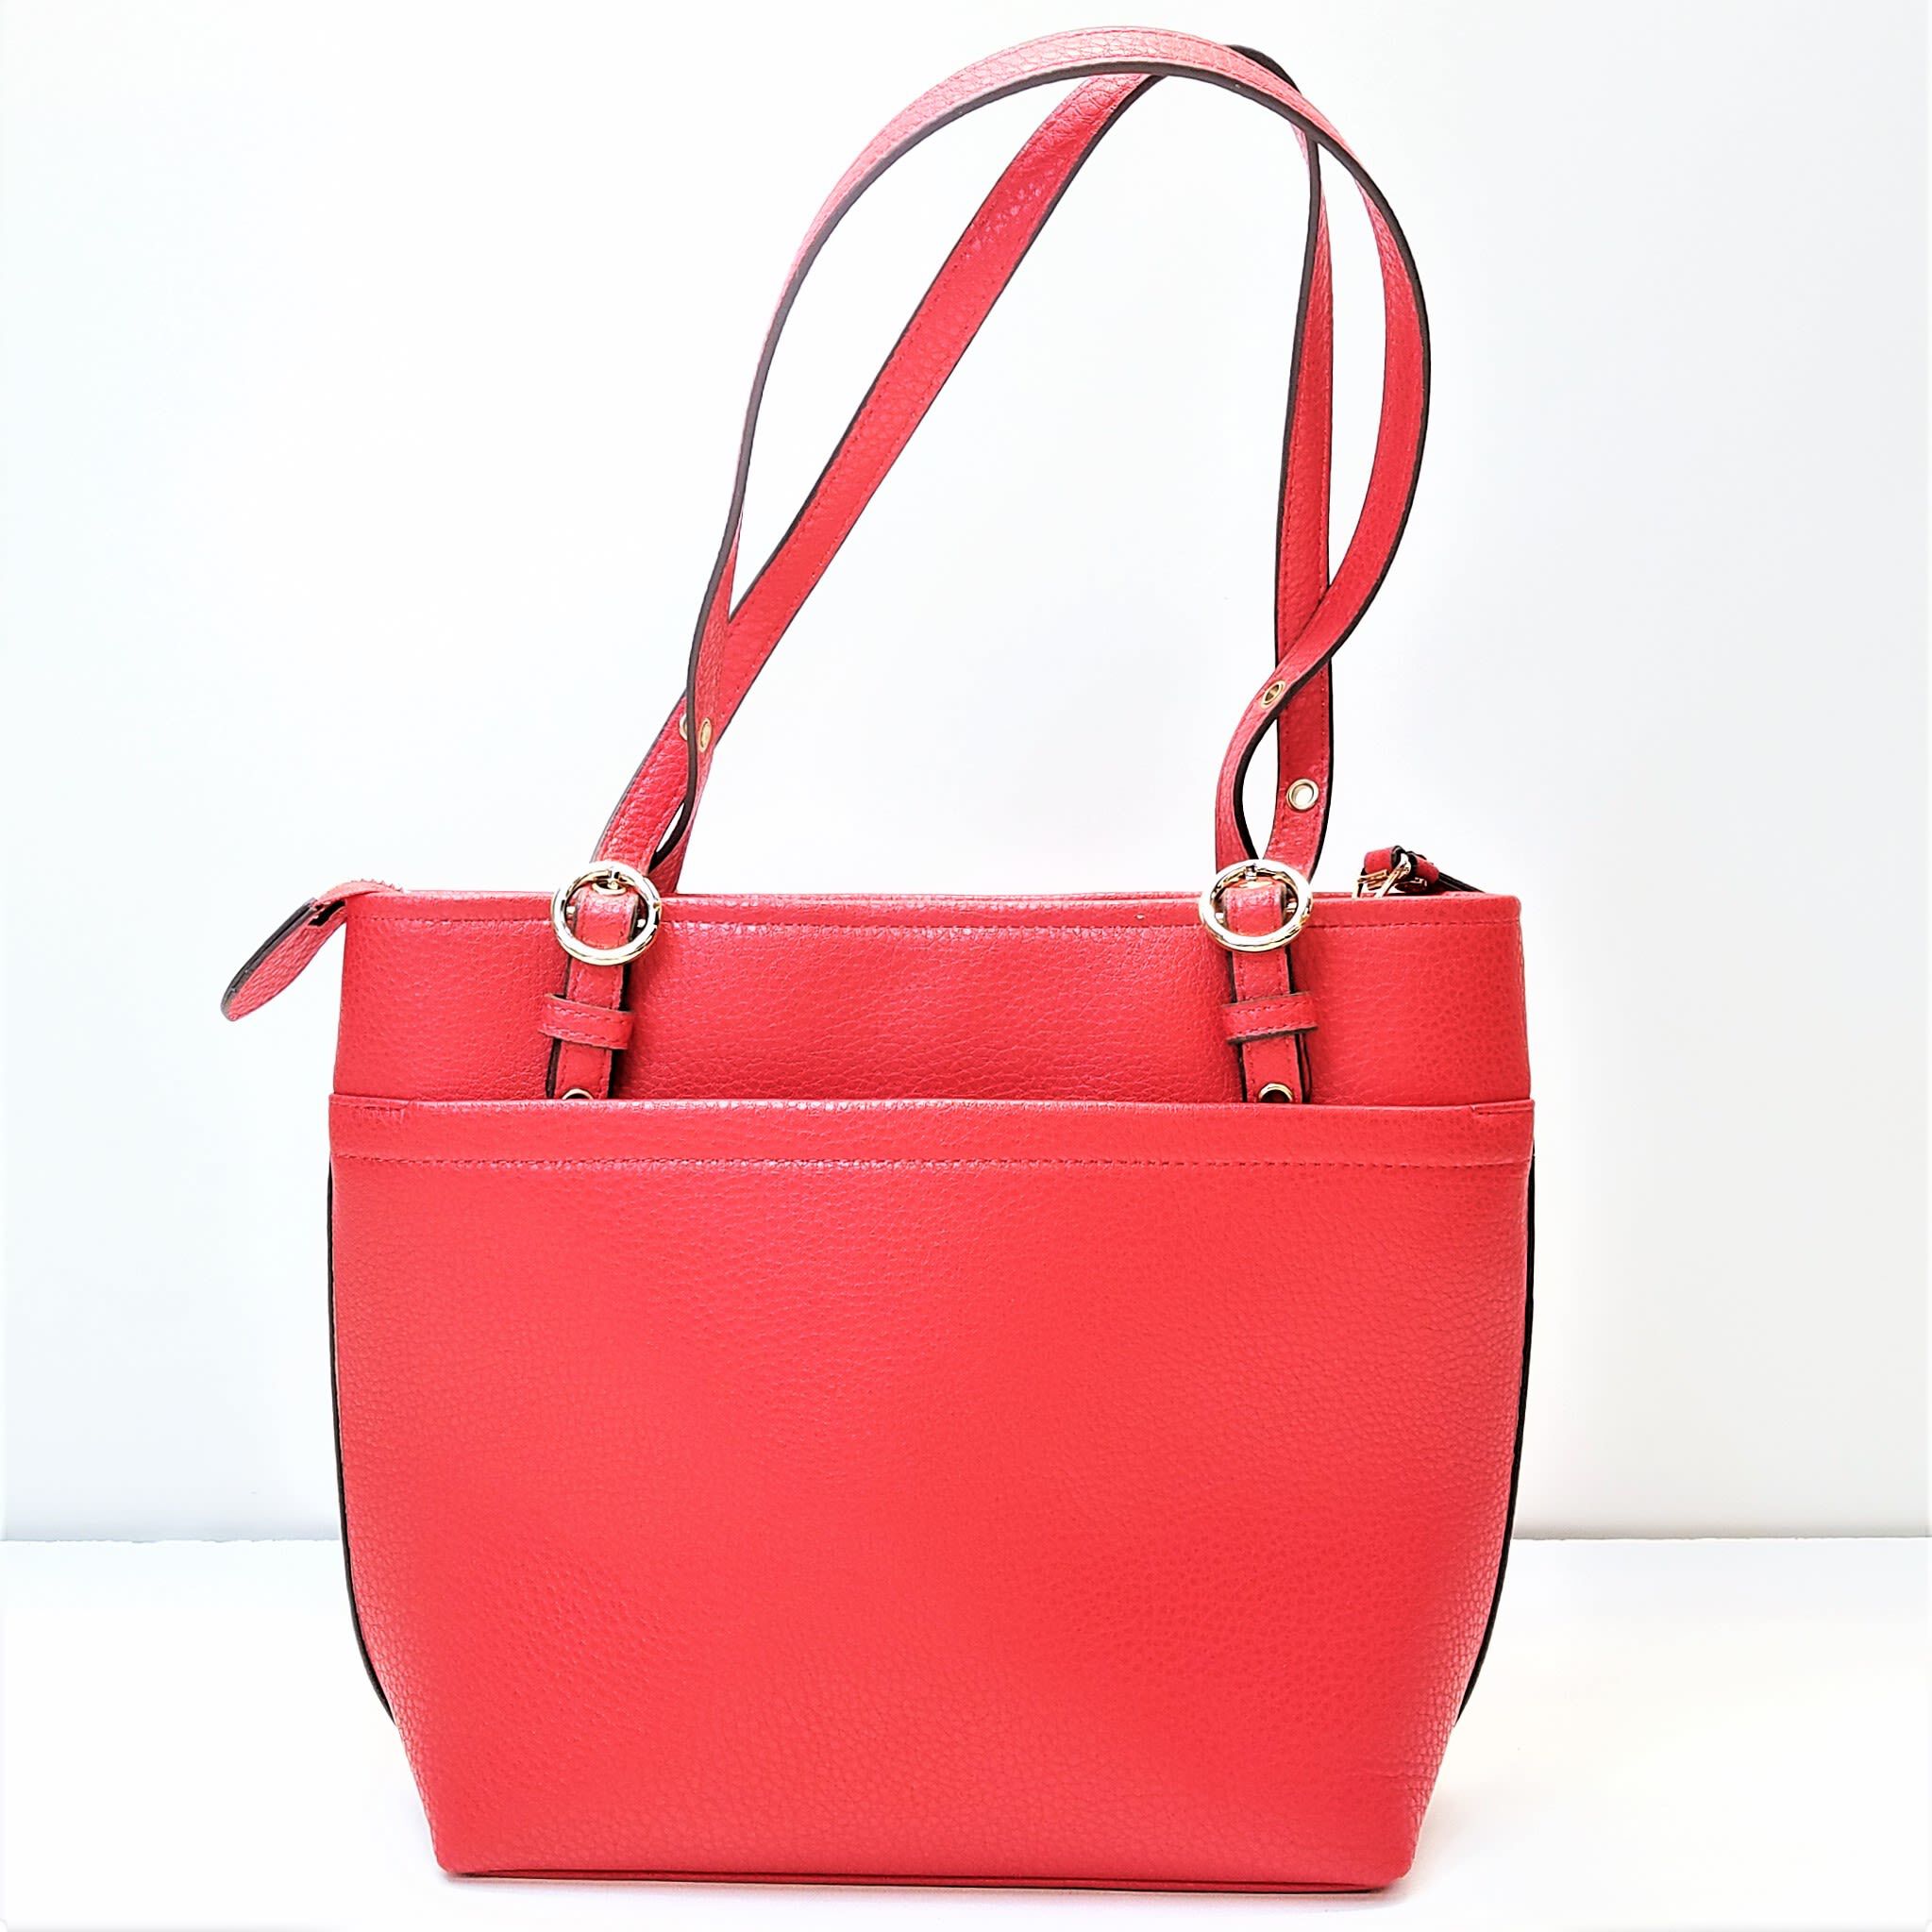 Red Handbags + FREE SHIPPING | Bags | Zappos.com